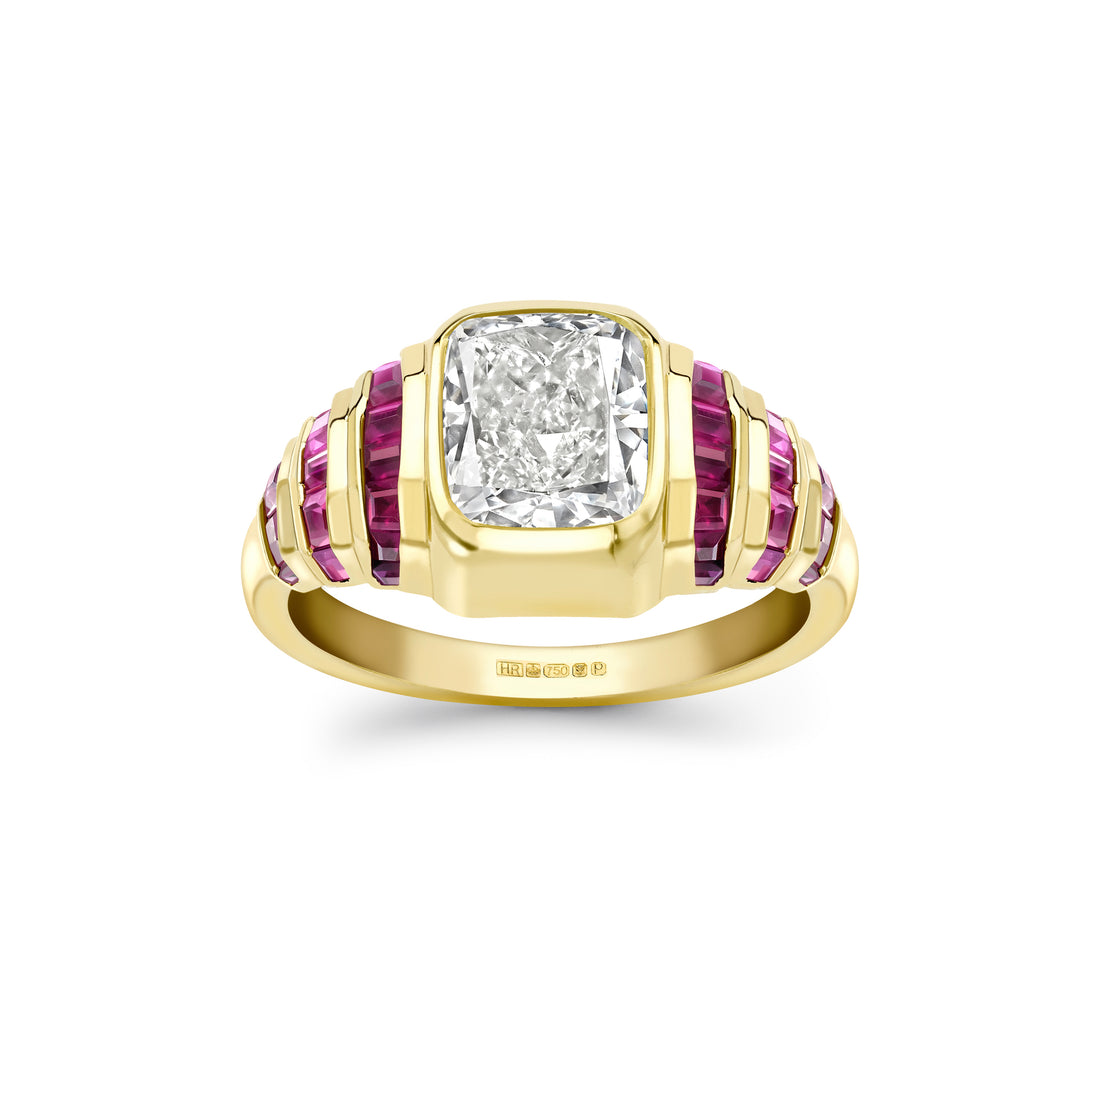  Cushion Cut Diamond & Pink Sapphire Ring by Hattie Rickards | The Cut London